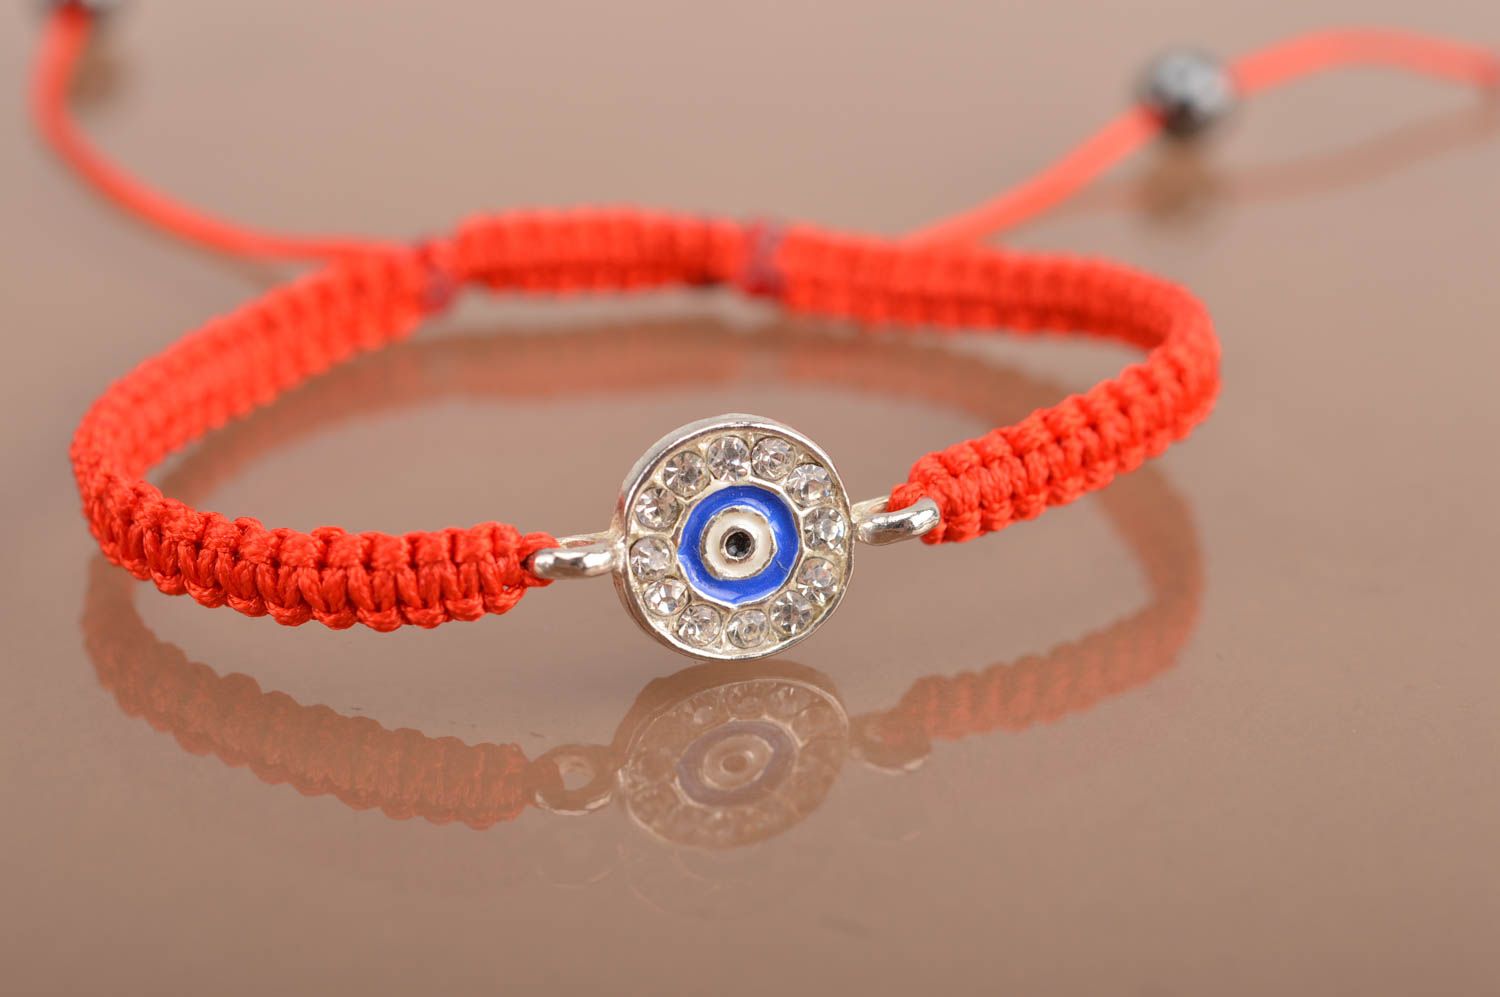 Beautiful handmade friendship bracelet woven of red threads designer jewelry photo 5